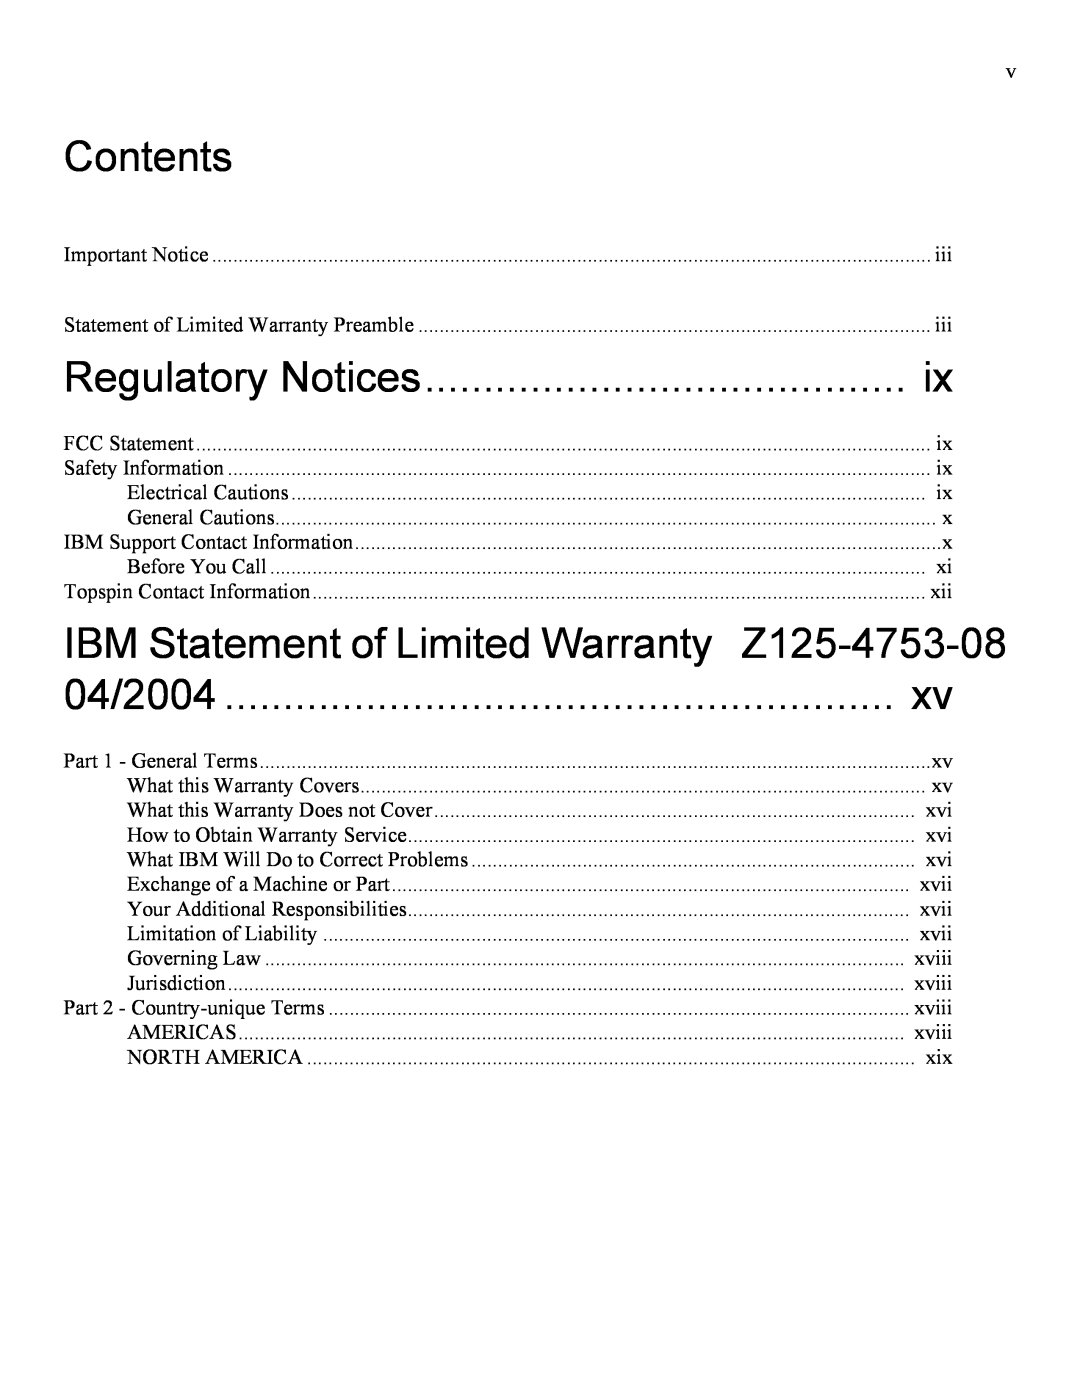 IBM 24R9718 IB manual Contents, IBM Statement of Limited Warranty, Z125-4753-08, Regulatory Notices, 04/2004 